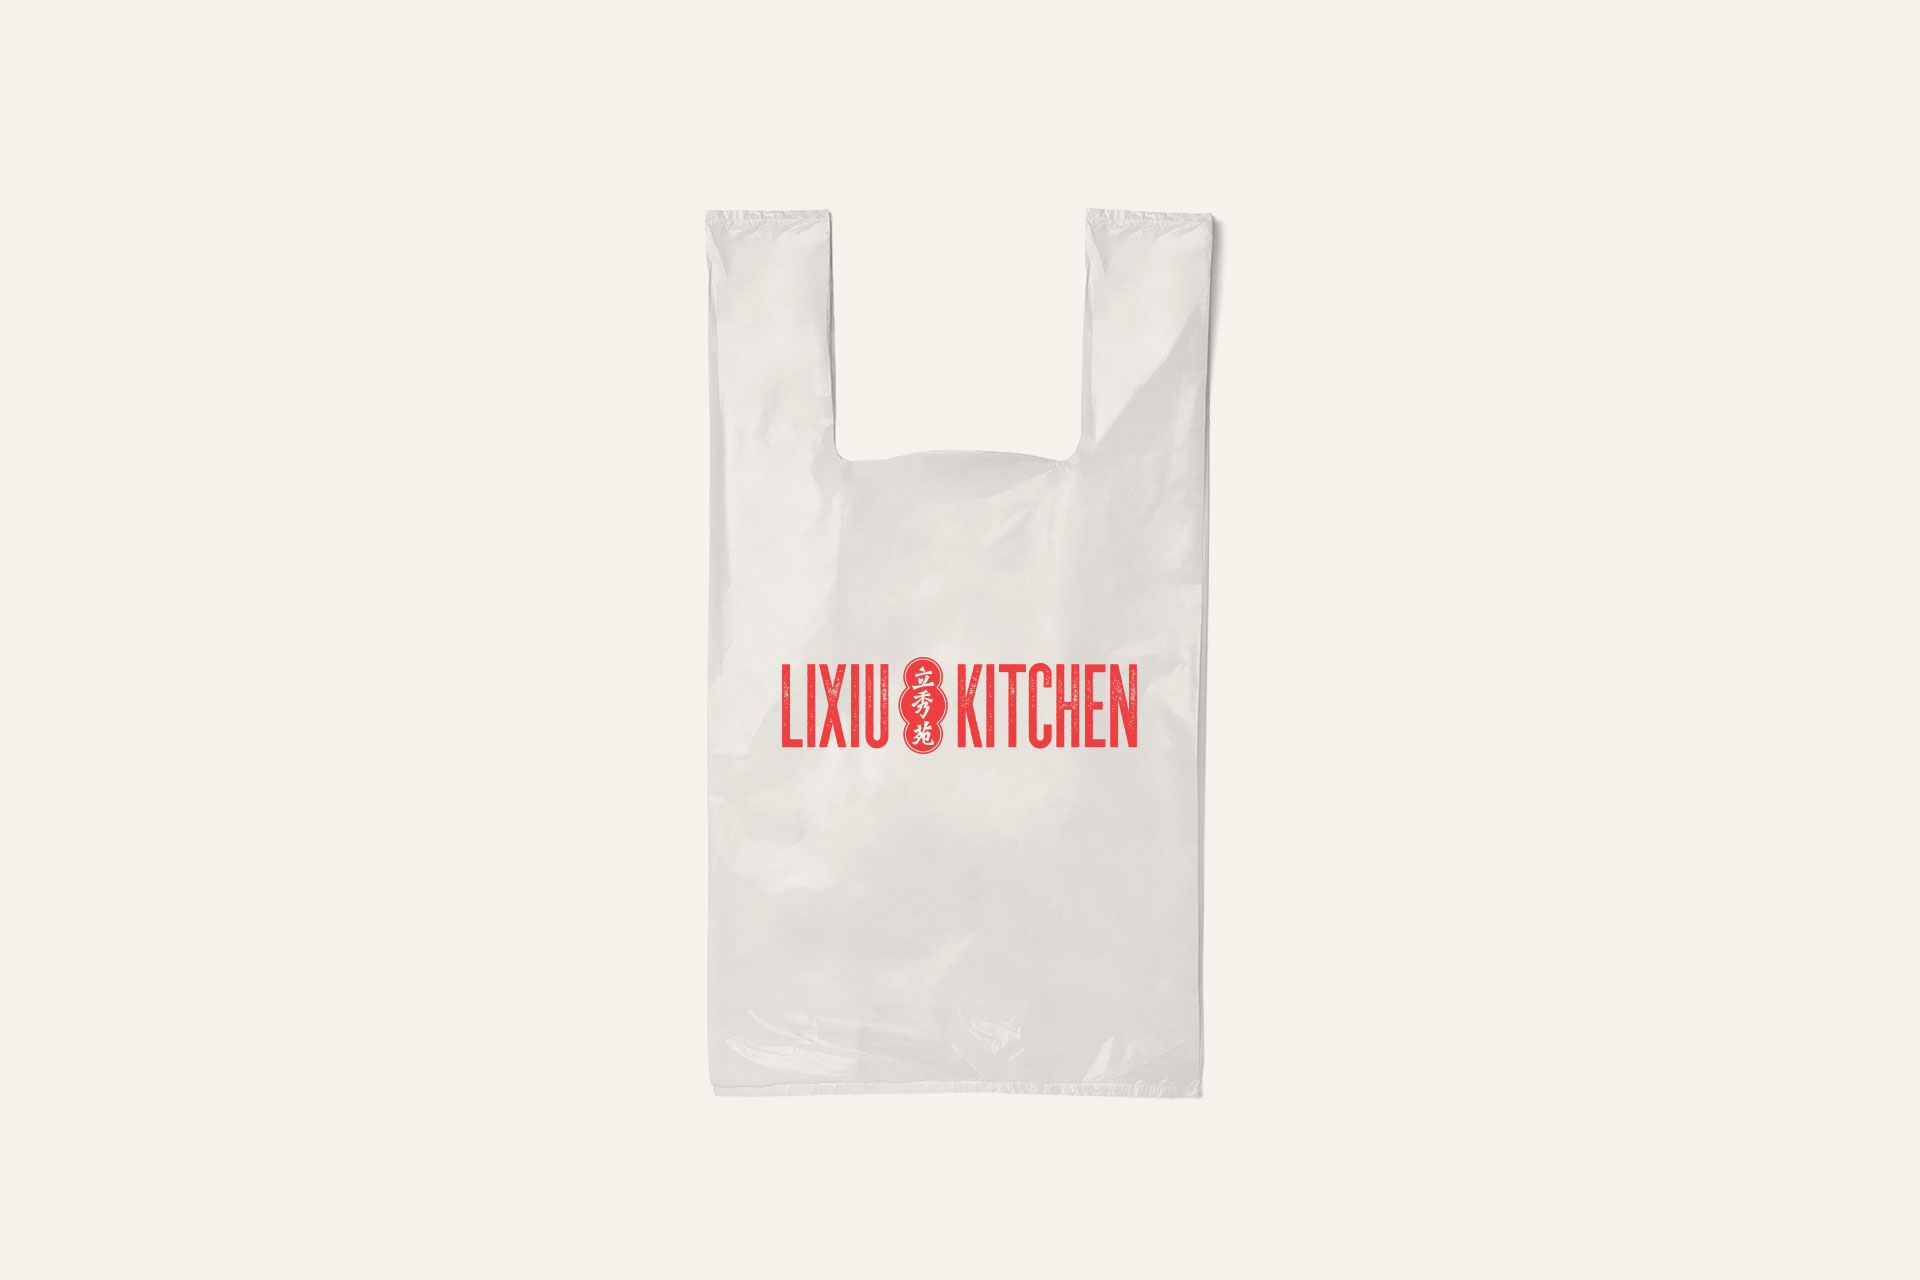 Li Xiu Kitchen branding by Z Creative Studio Branding & Graphic Design Melbourne